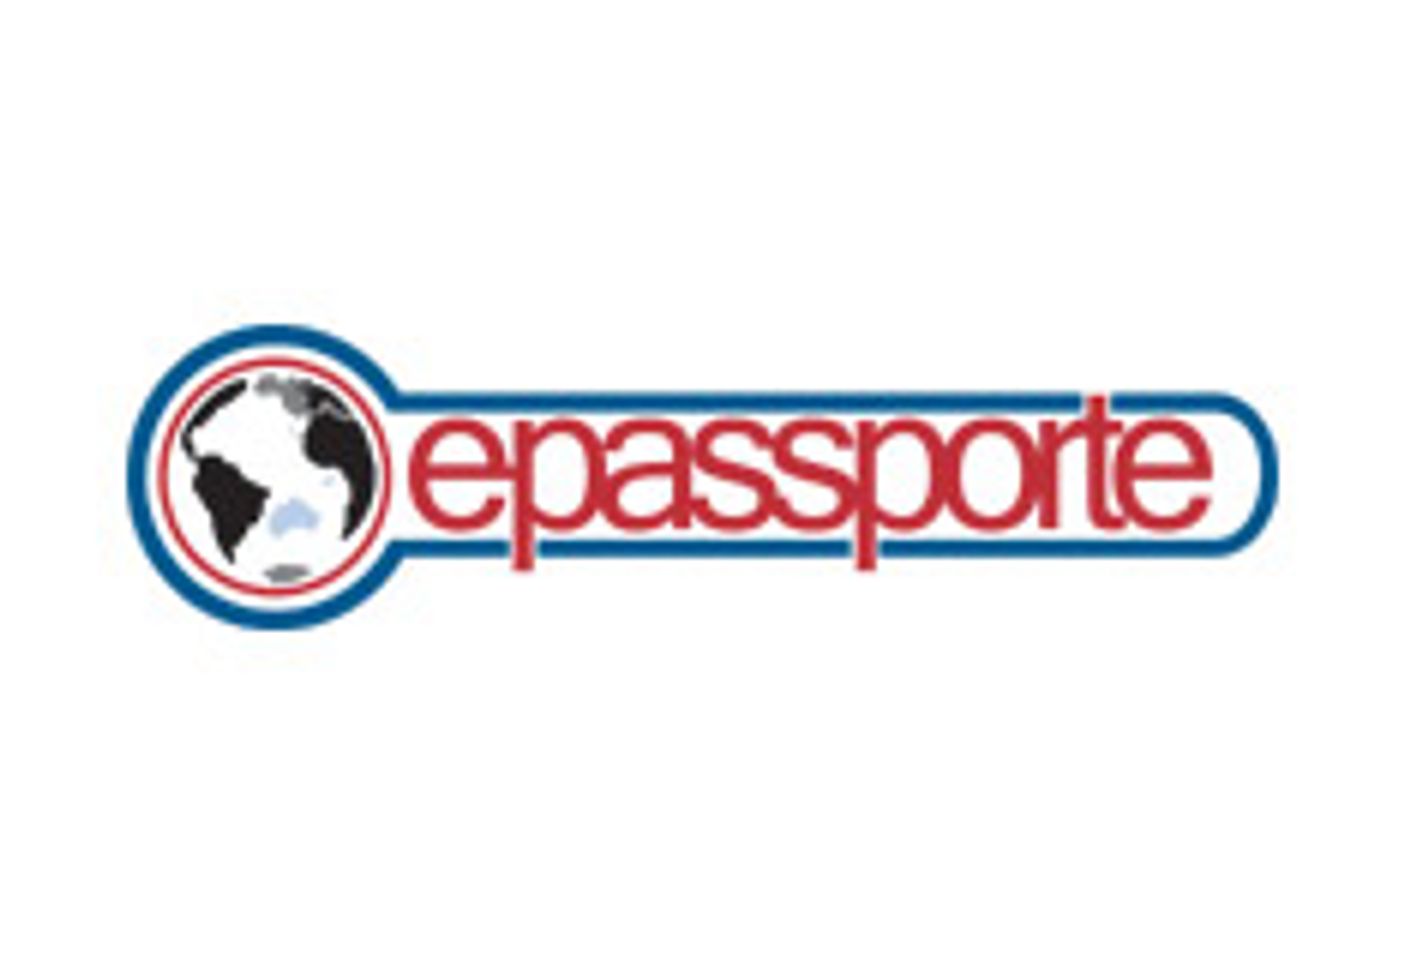 ePassporte Introduces Funding Option for EU Consumers